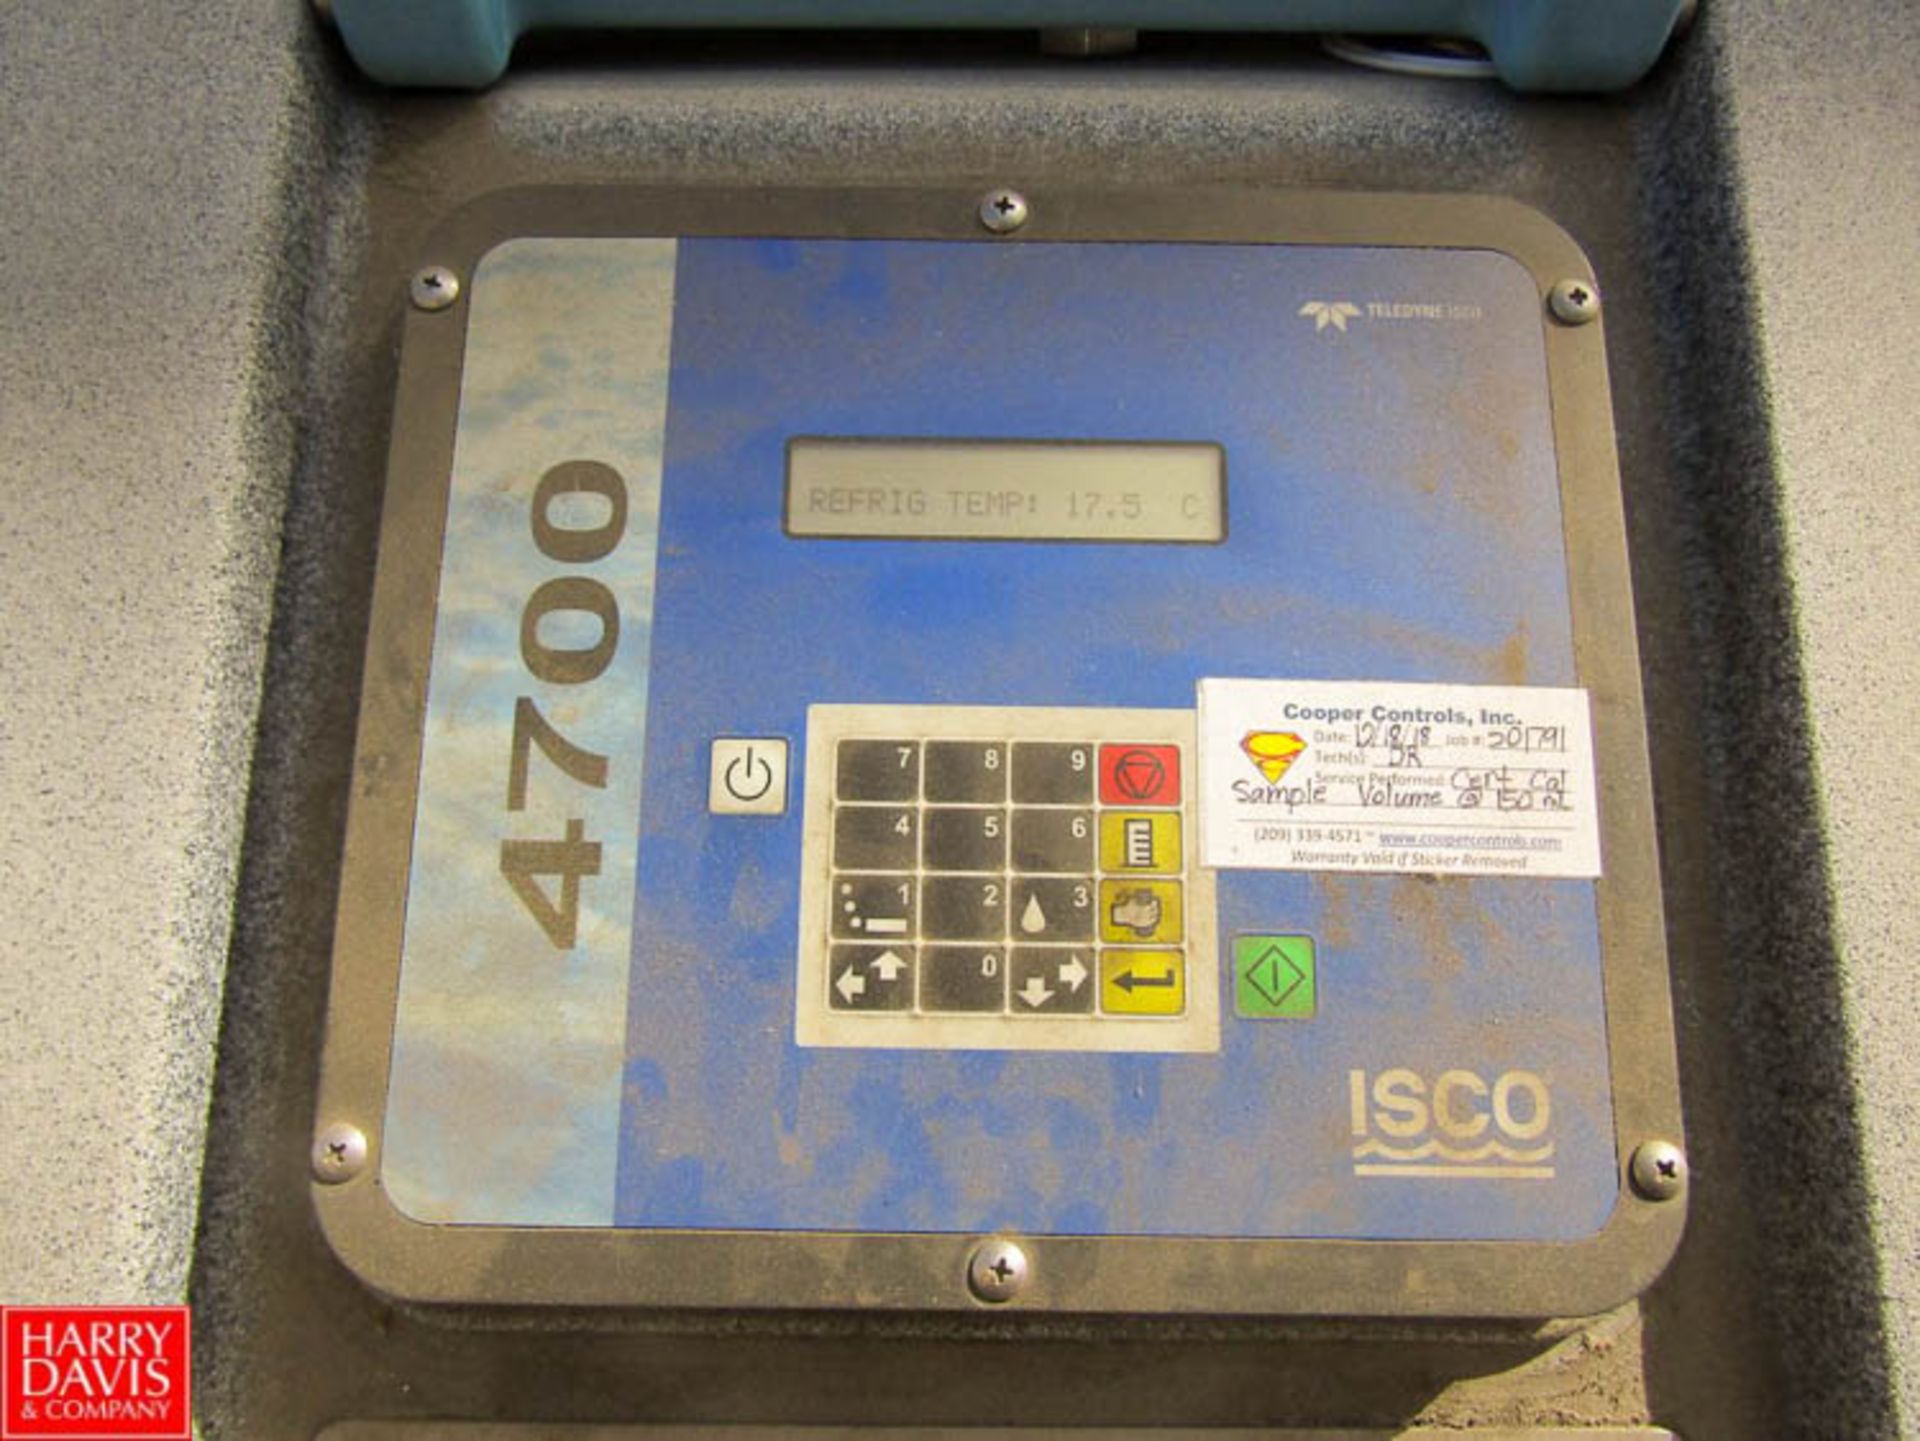 Teledyne ISCO Refrigerated Sampler Model 4700 with Bubbler Flow Meter Model 4230 Rigging Fee: $ 100 - Image 2 of 3